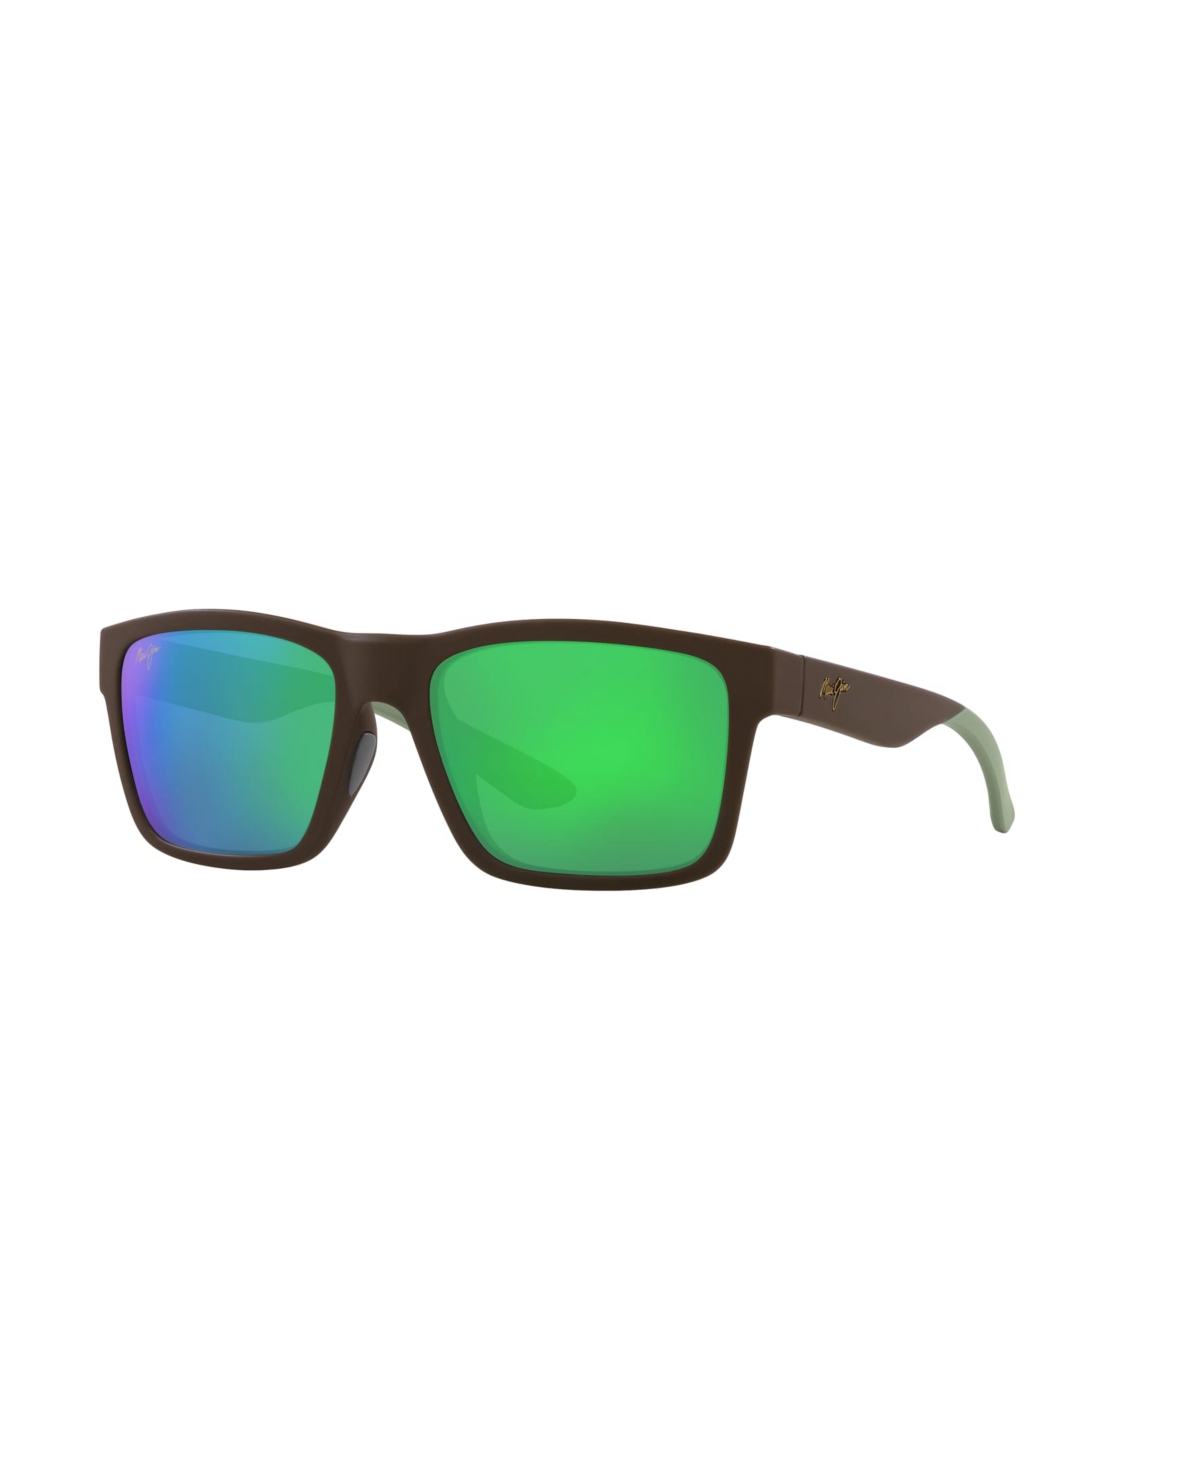 Maui Jim Unisex Polarized Sunglasses, The Flats Mj000738 In Brown Green